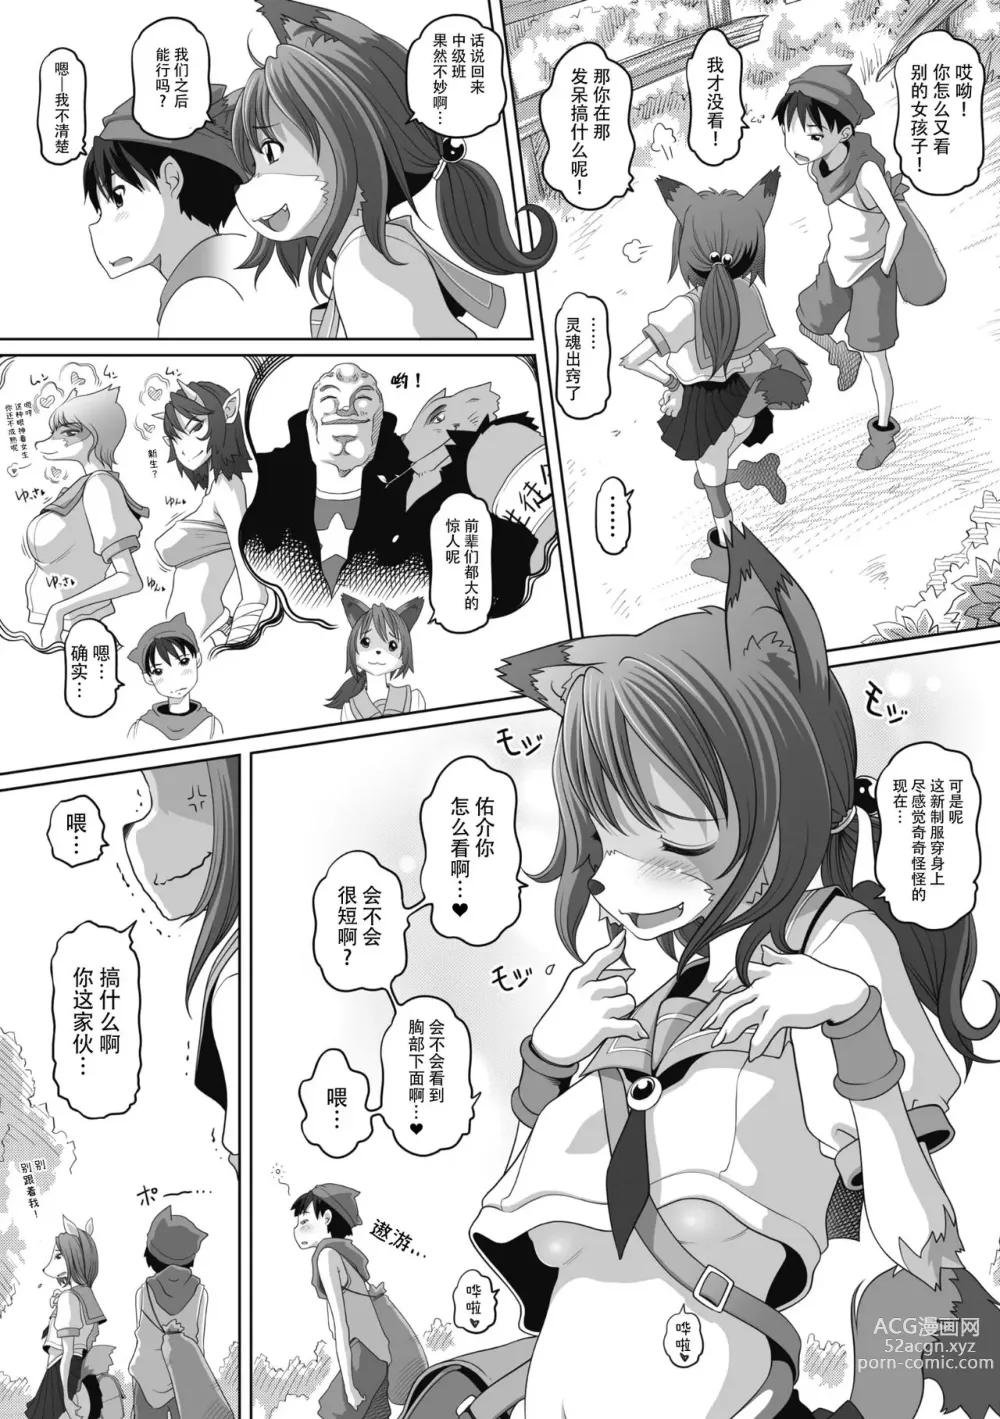 Page 2 of manga 每天都是发情期